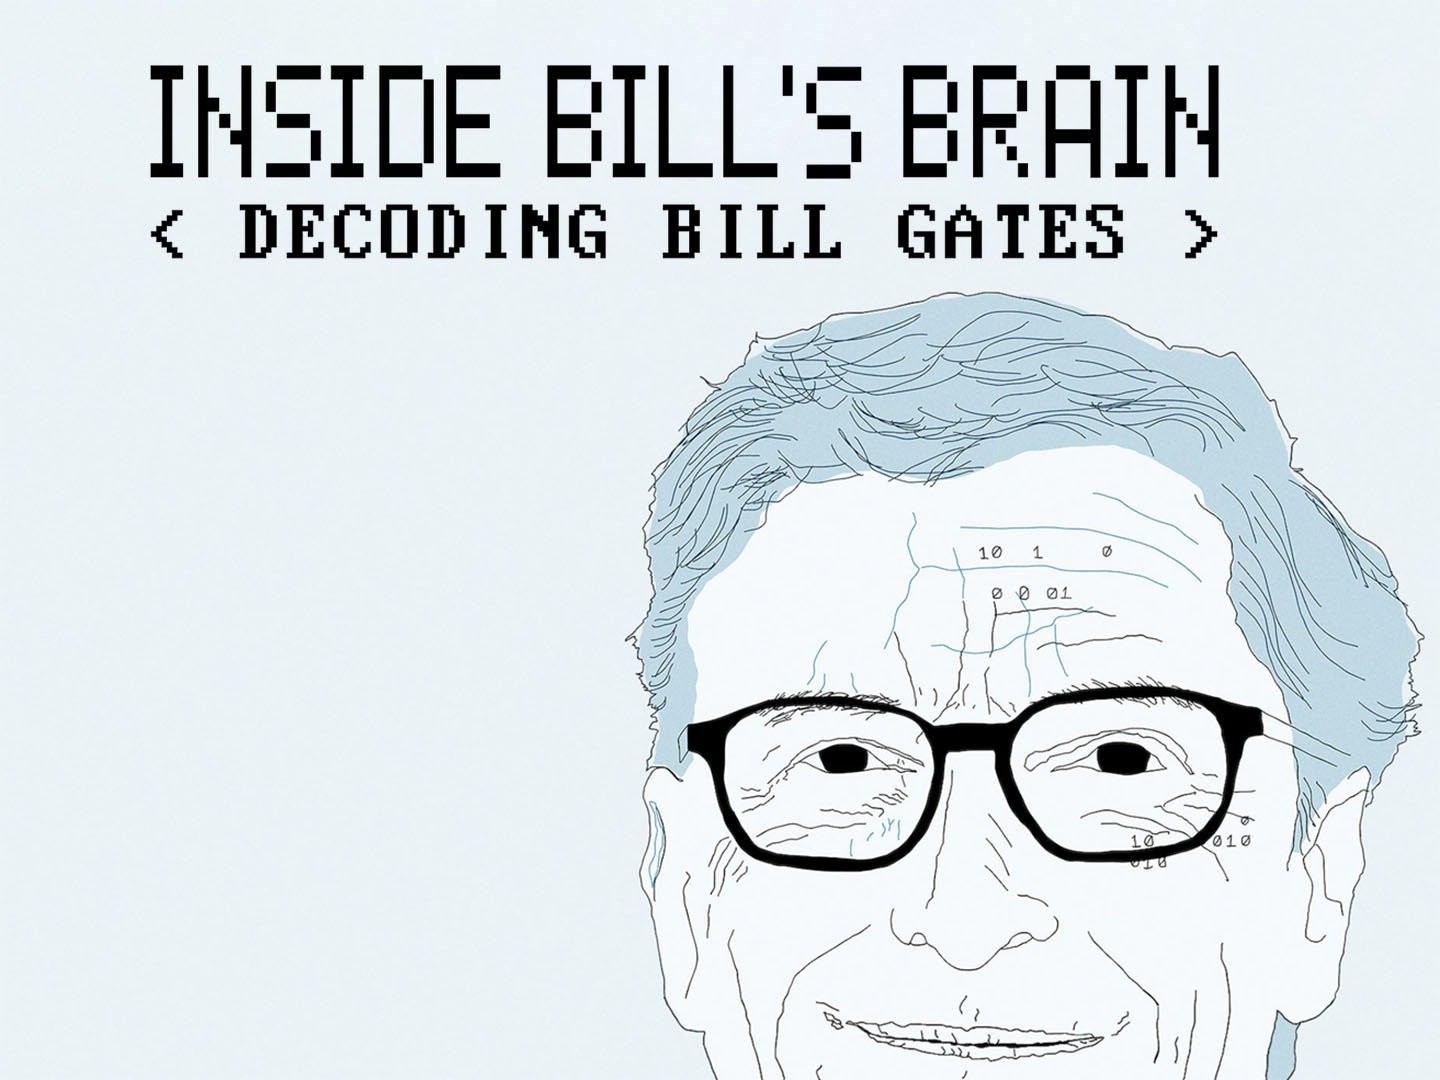 Inside Bill's Brain: Decoding Bill Gates - Rotten Tomatoes